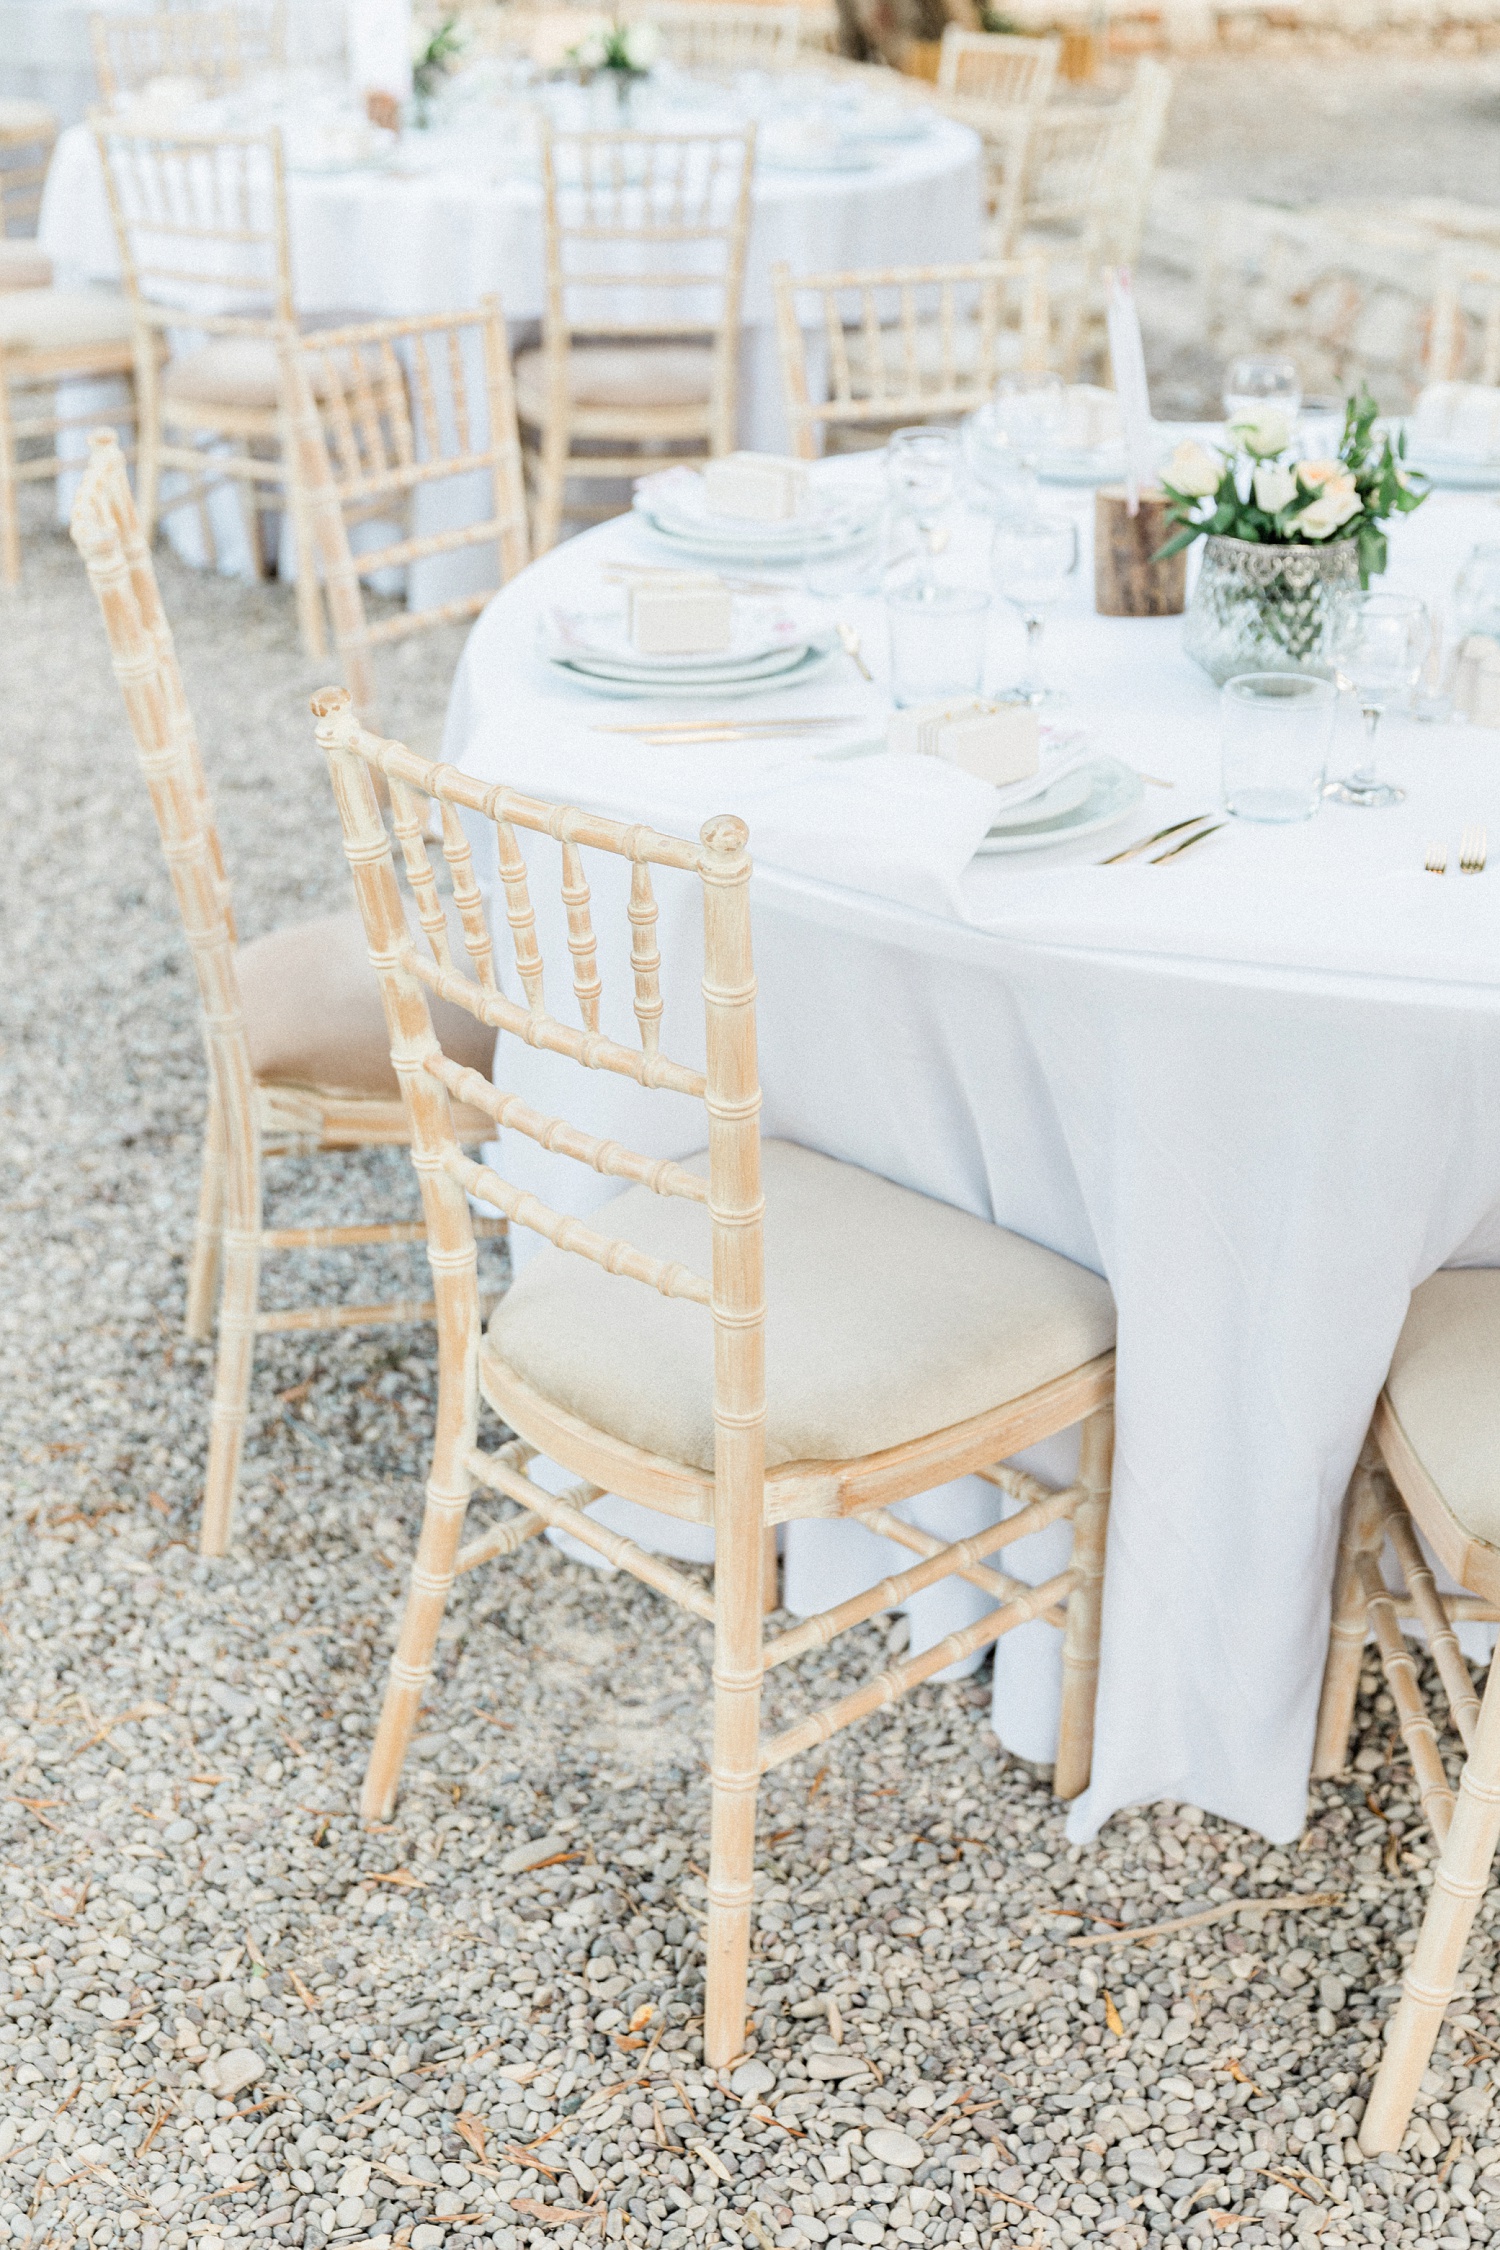 Cream chairs at an olive grove wedding at Kirki on Filiatro beach in Ithaca